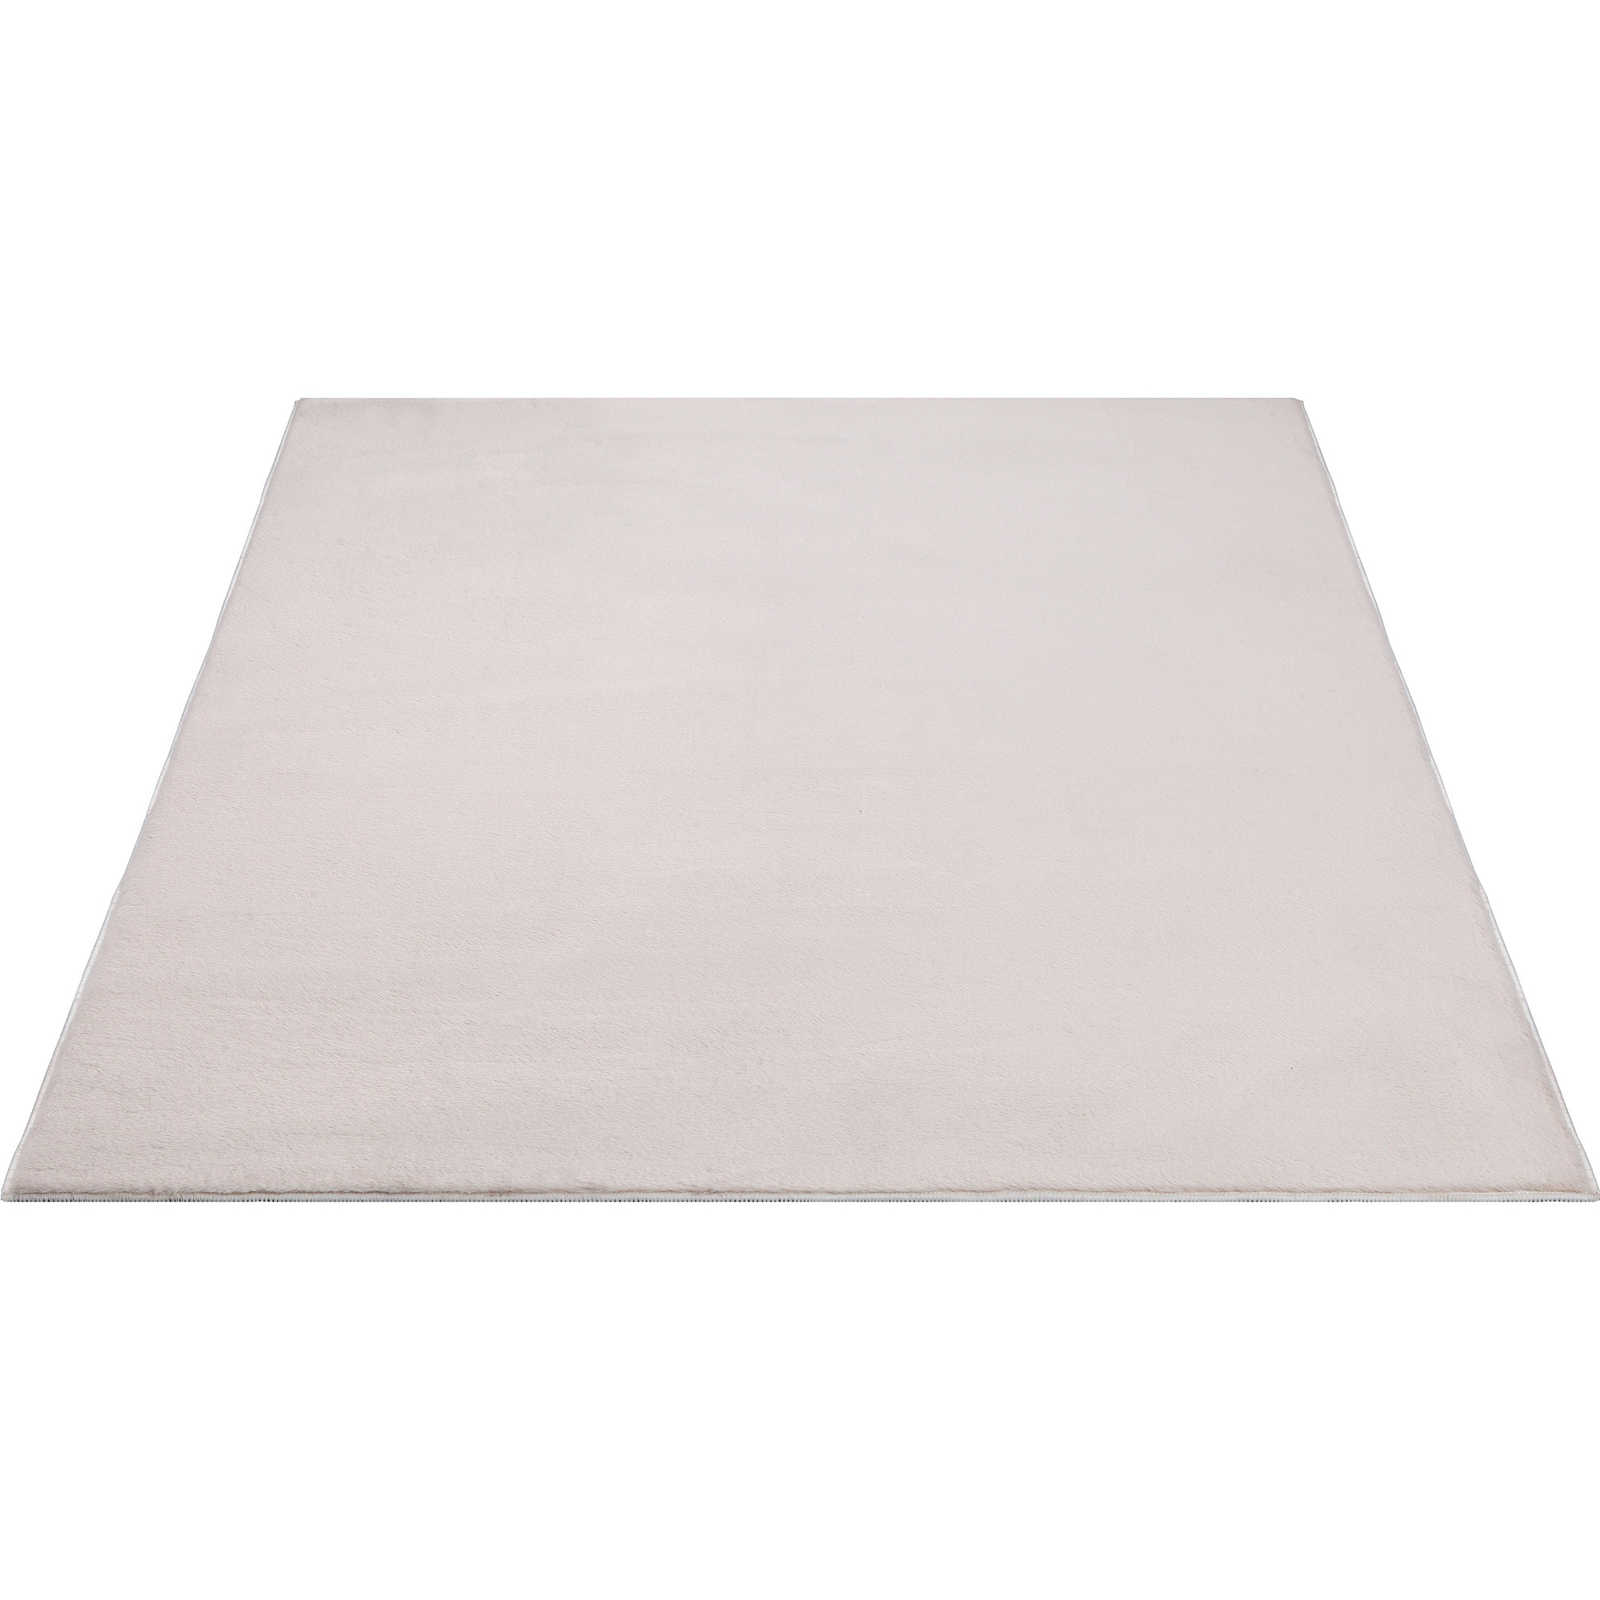 Plain high pile carpet in soft beige - 340 x 240 cm
